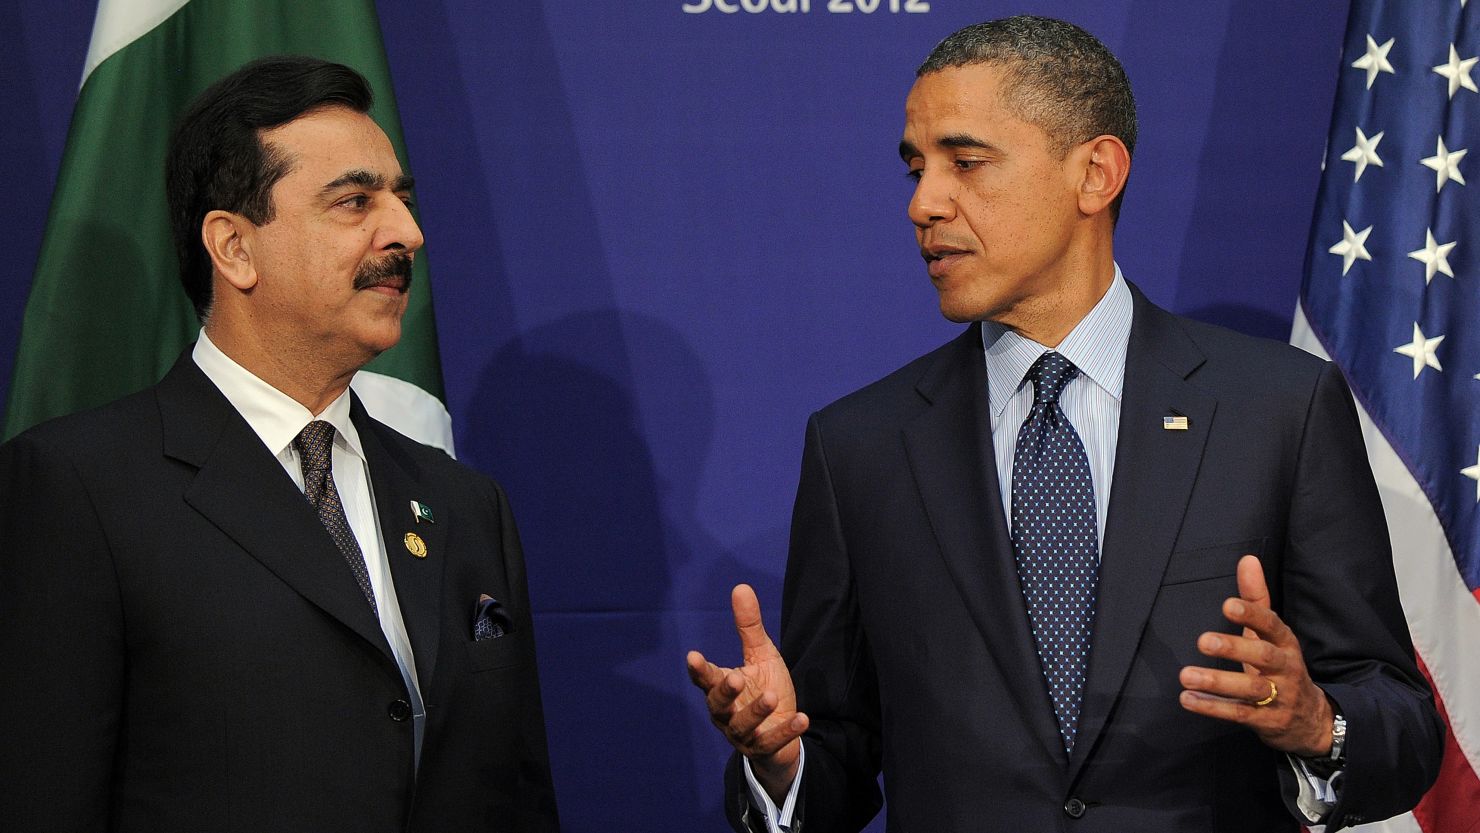 President Obama talks with Pakistan's Prime Minister Yousuf Raza Gilani. Pakistan has accepted NATO's invitation to the Chicago summit.